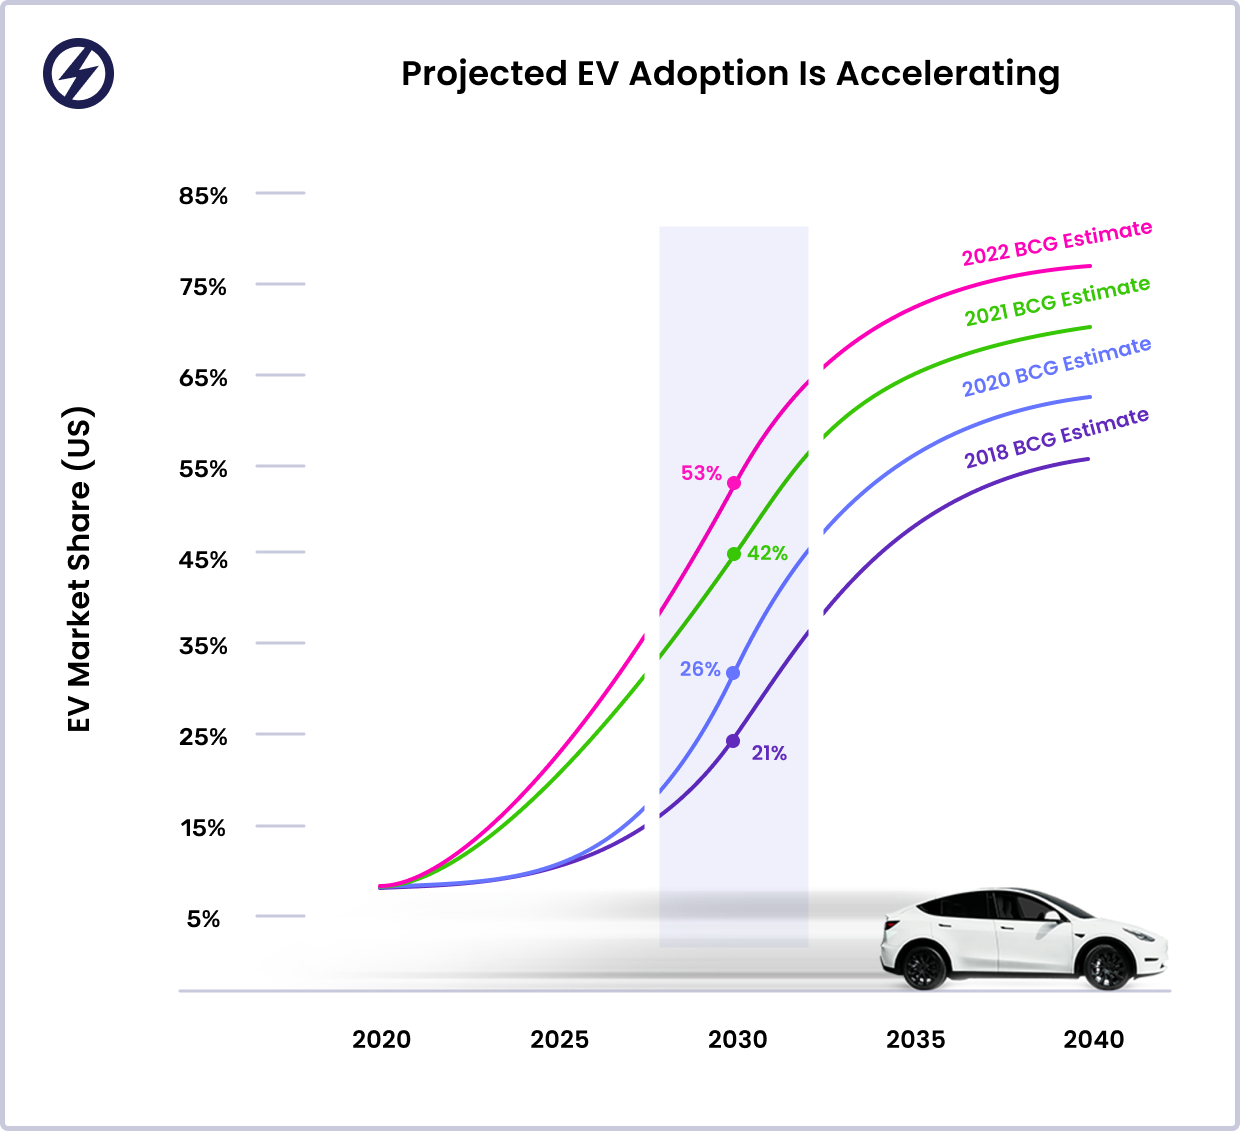 U.S. EV adoption is happening faster than anticipated